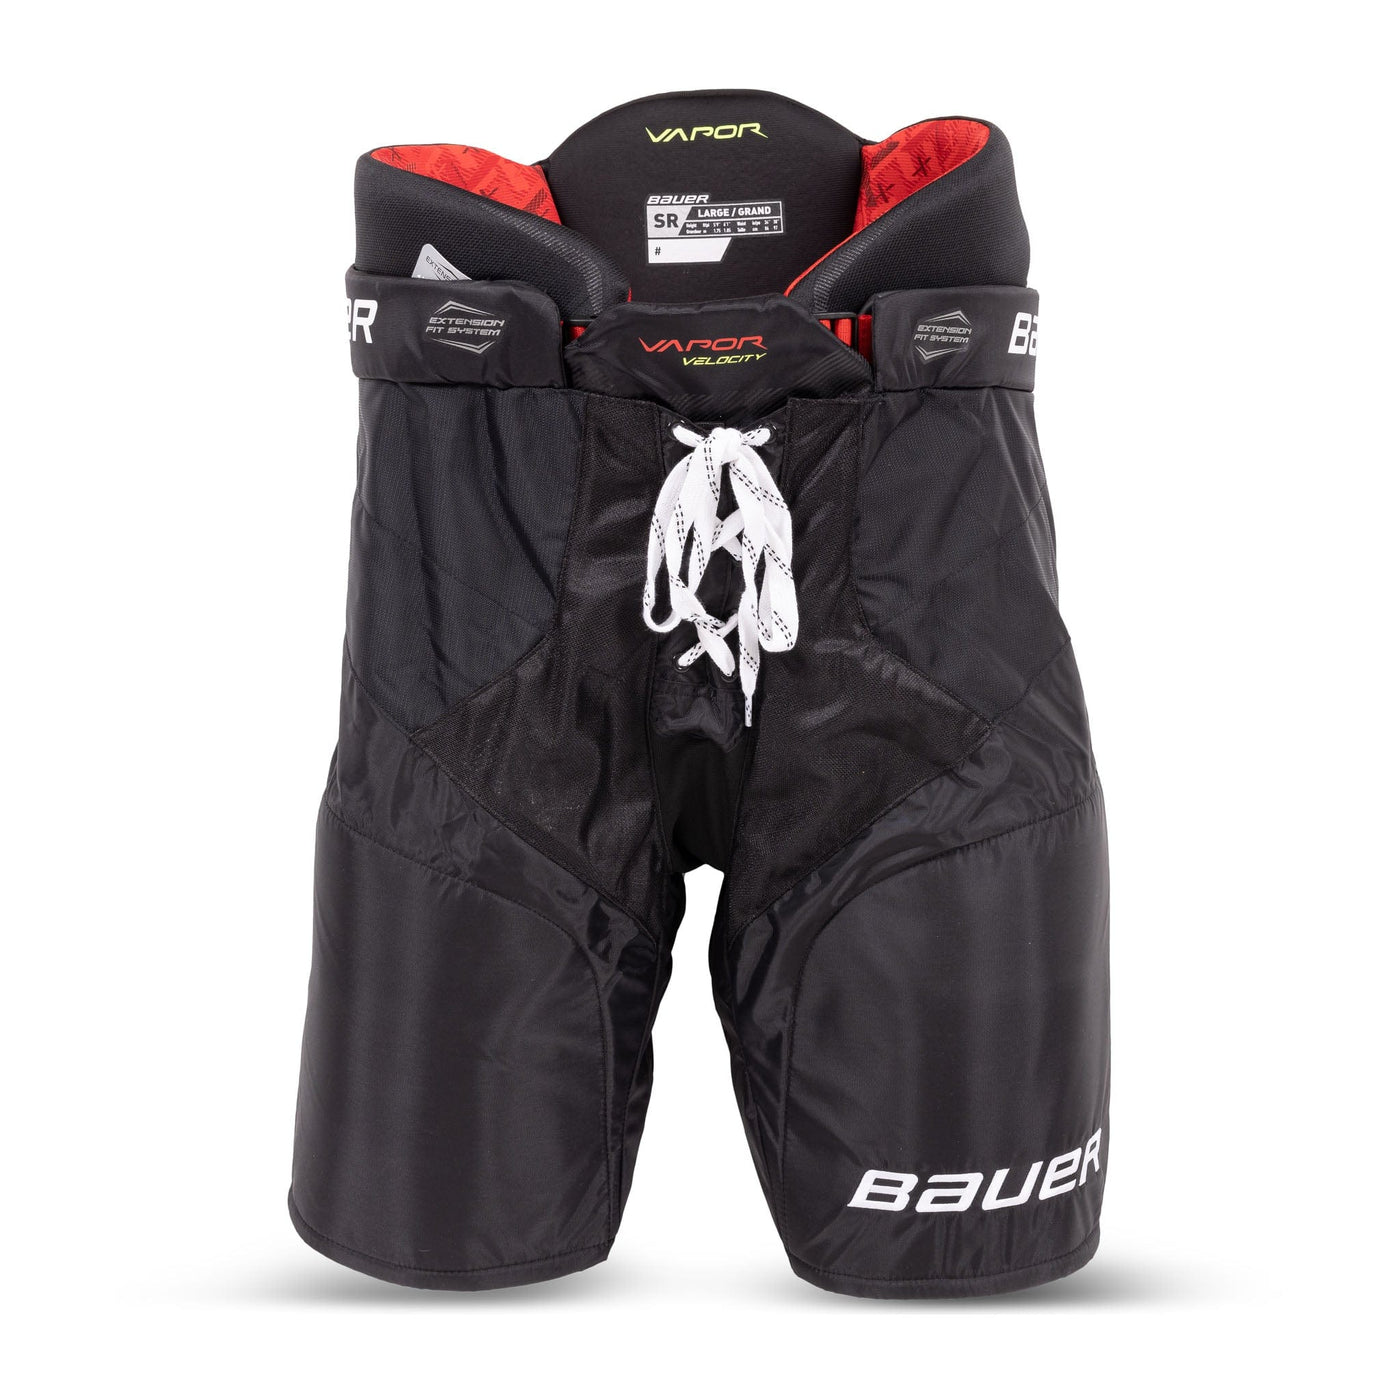 Bauer Vapor Velocity Senior Hockey Pants - The Hockey Shop Source For Sports